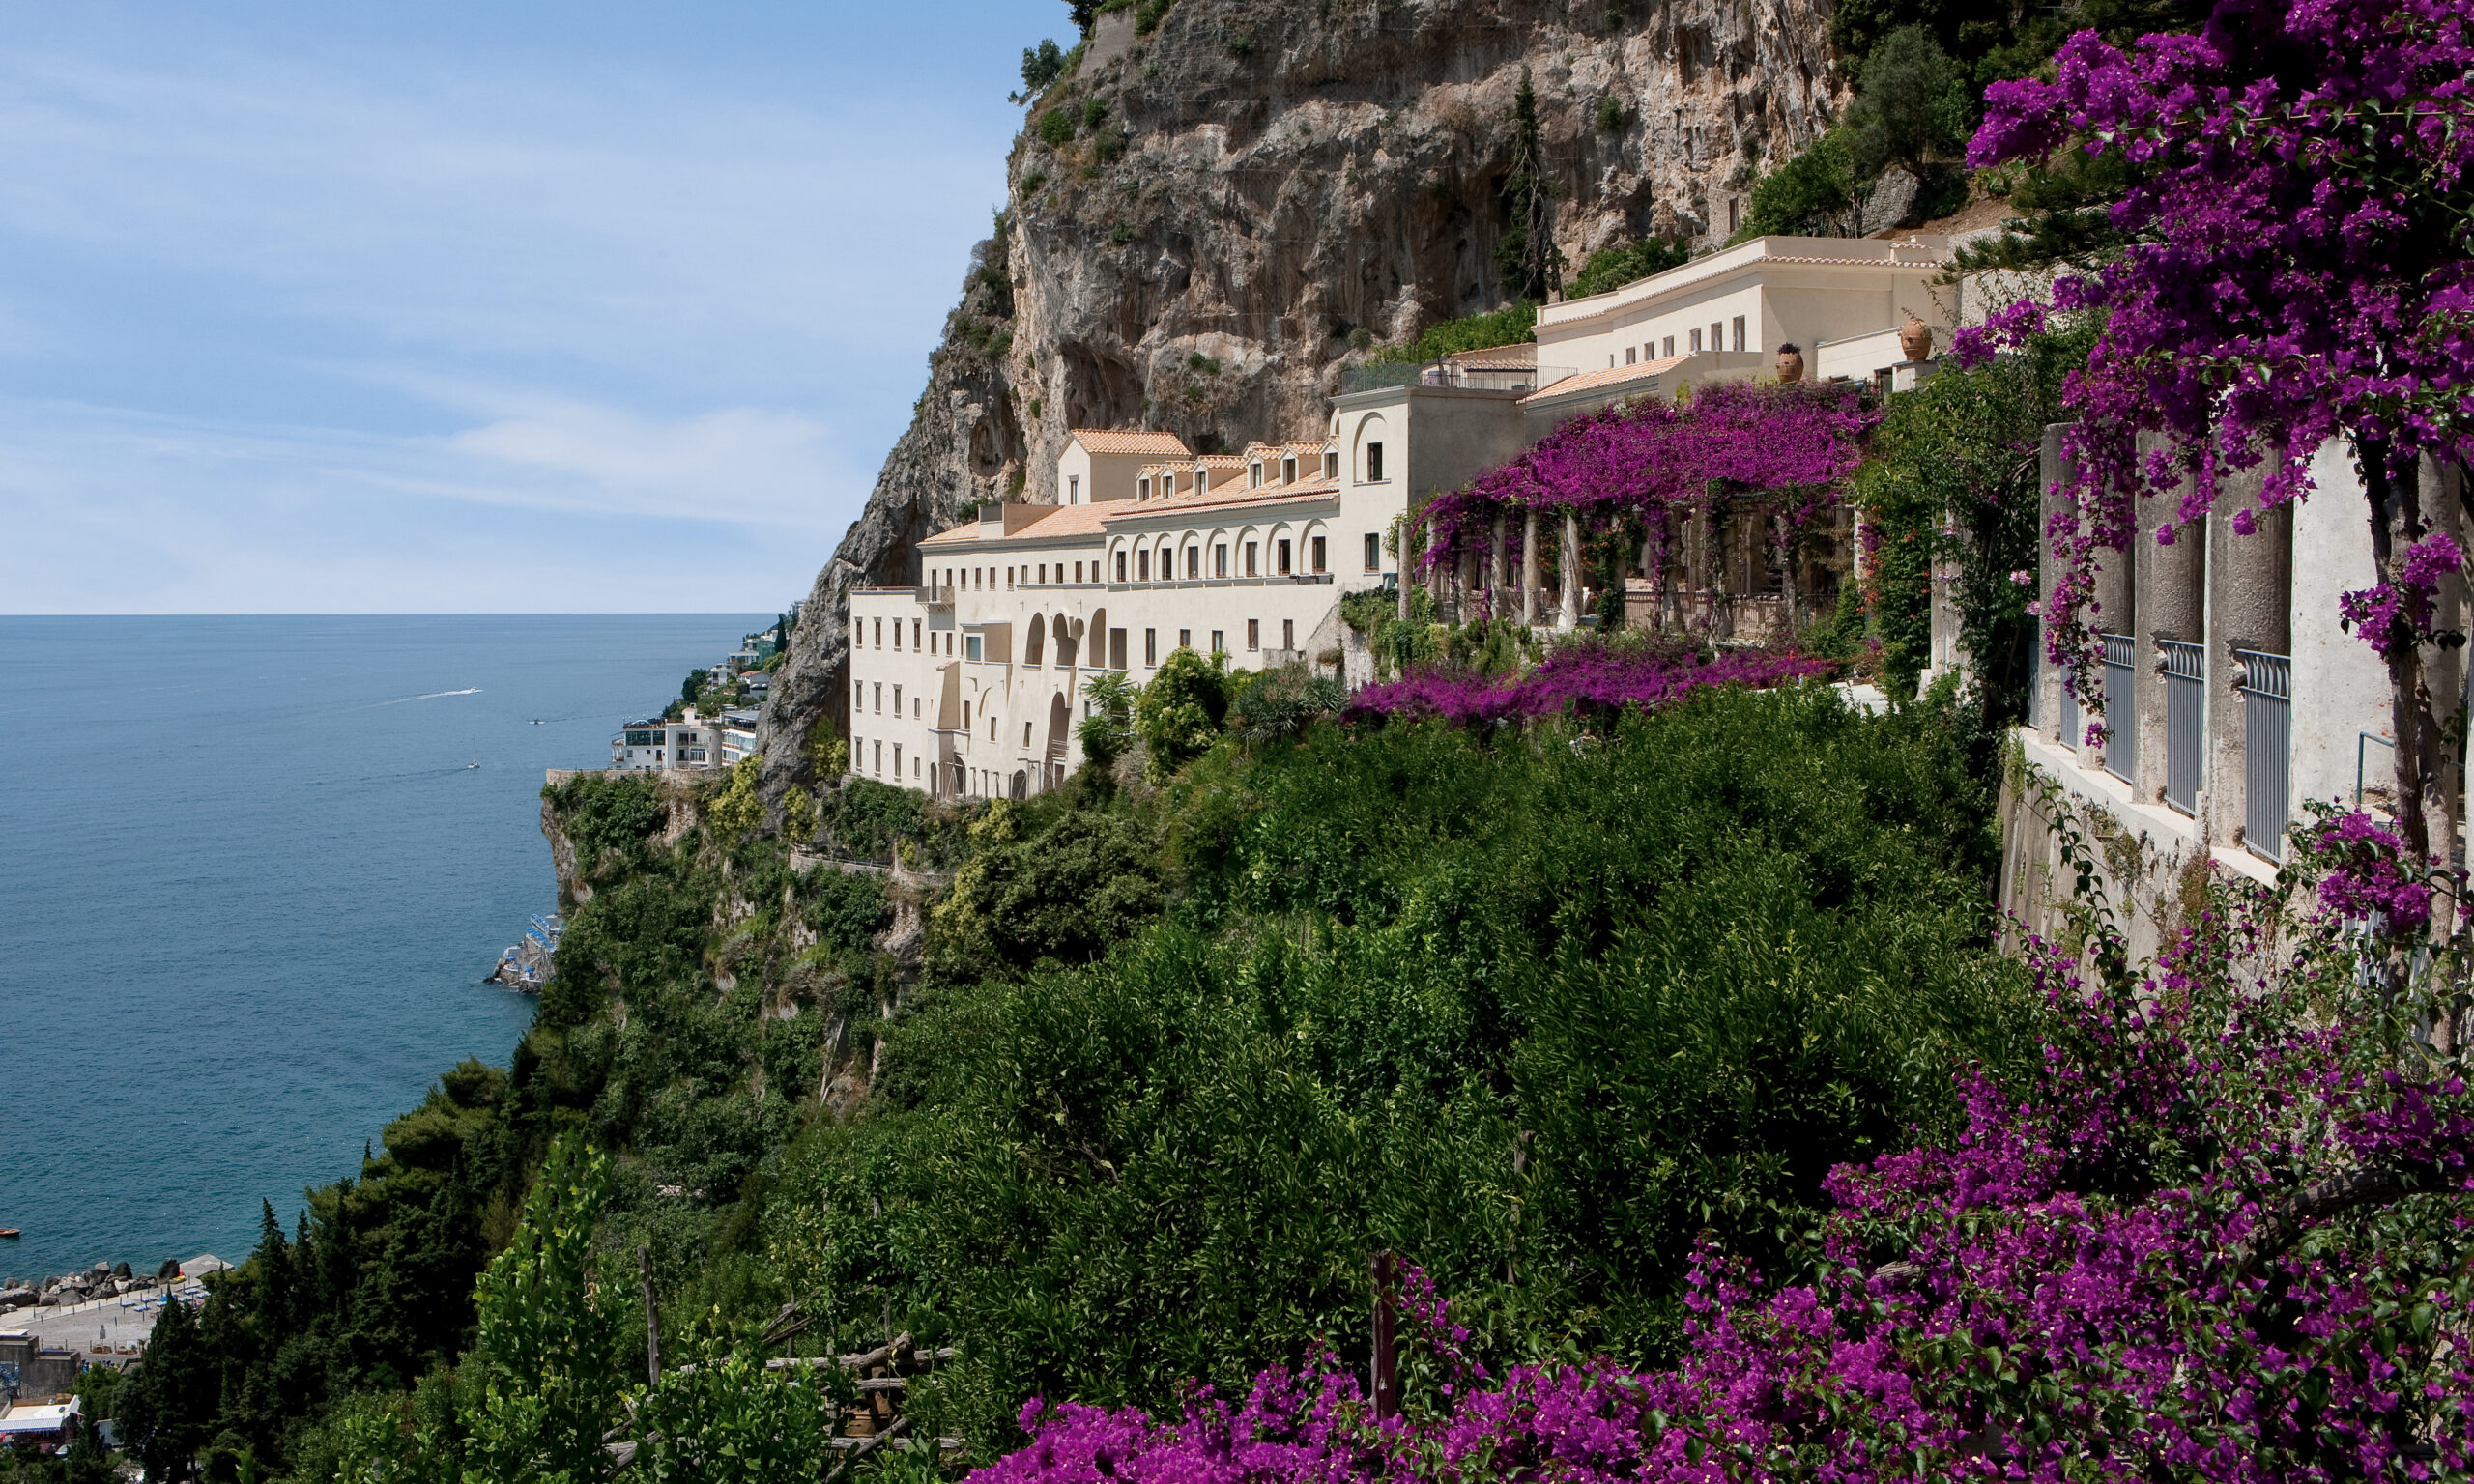 Minor Hotels Announces Anantara Grand Hotel Convento di Amalfi to Open on Italy’s Prestigious Amalfi Coast